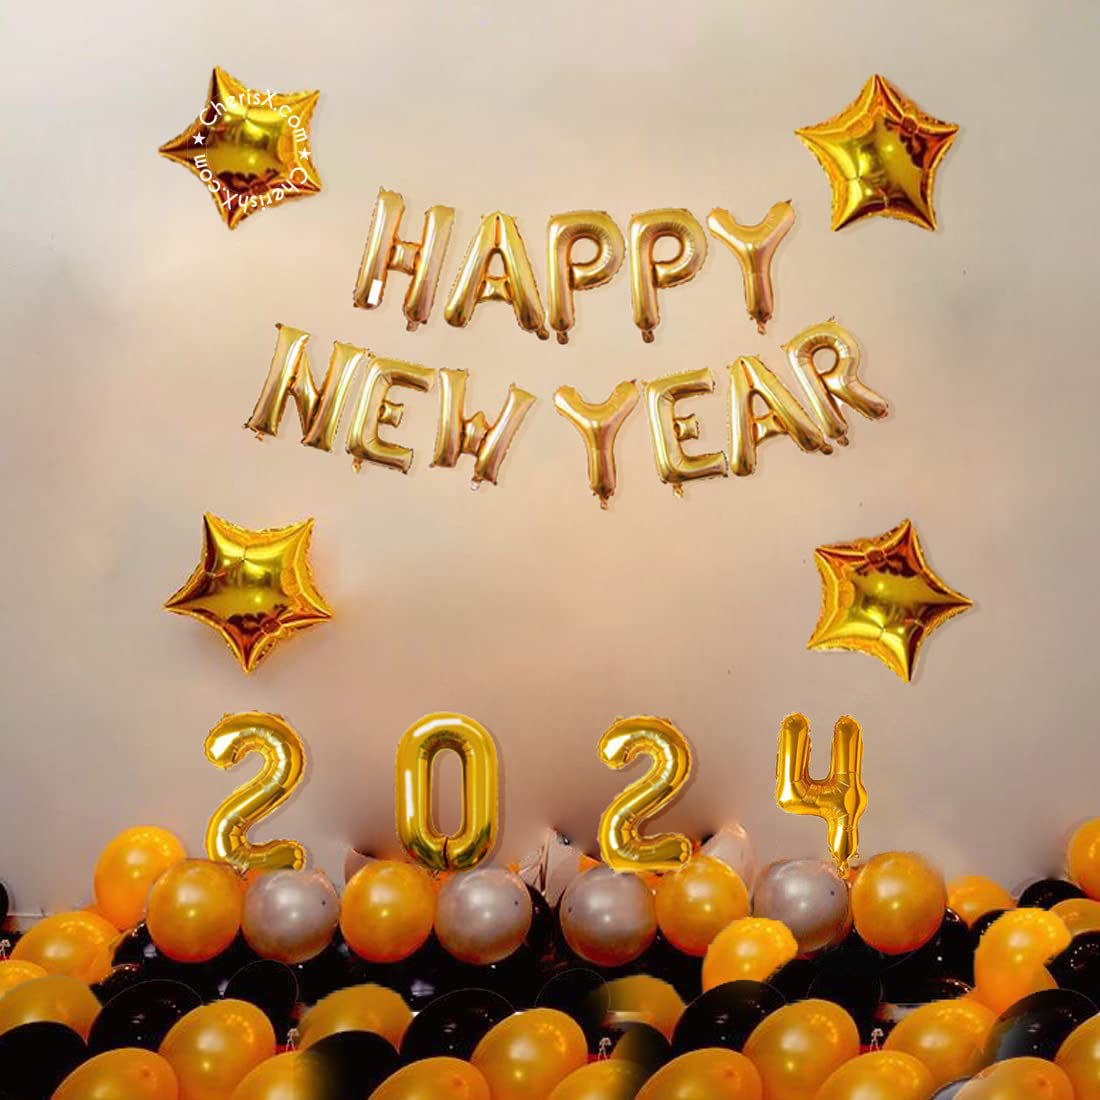 Golden Happy New Year 2024 Foil Balloon Kit DIY Decoration Party Kit - 81 Pcs